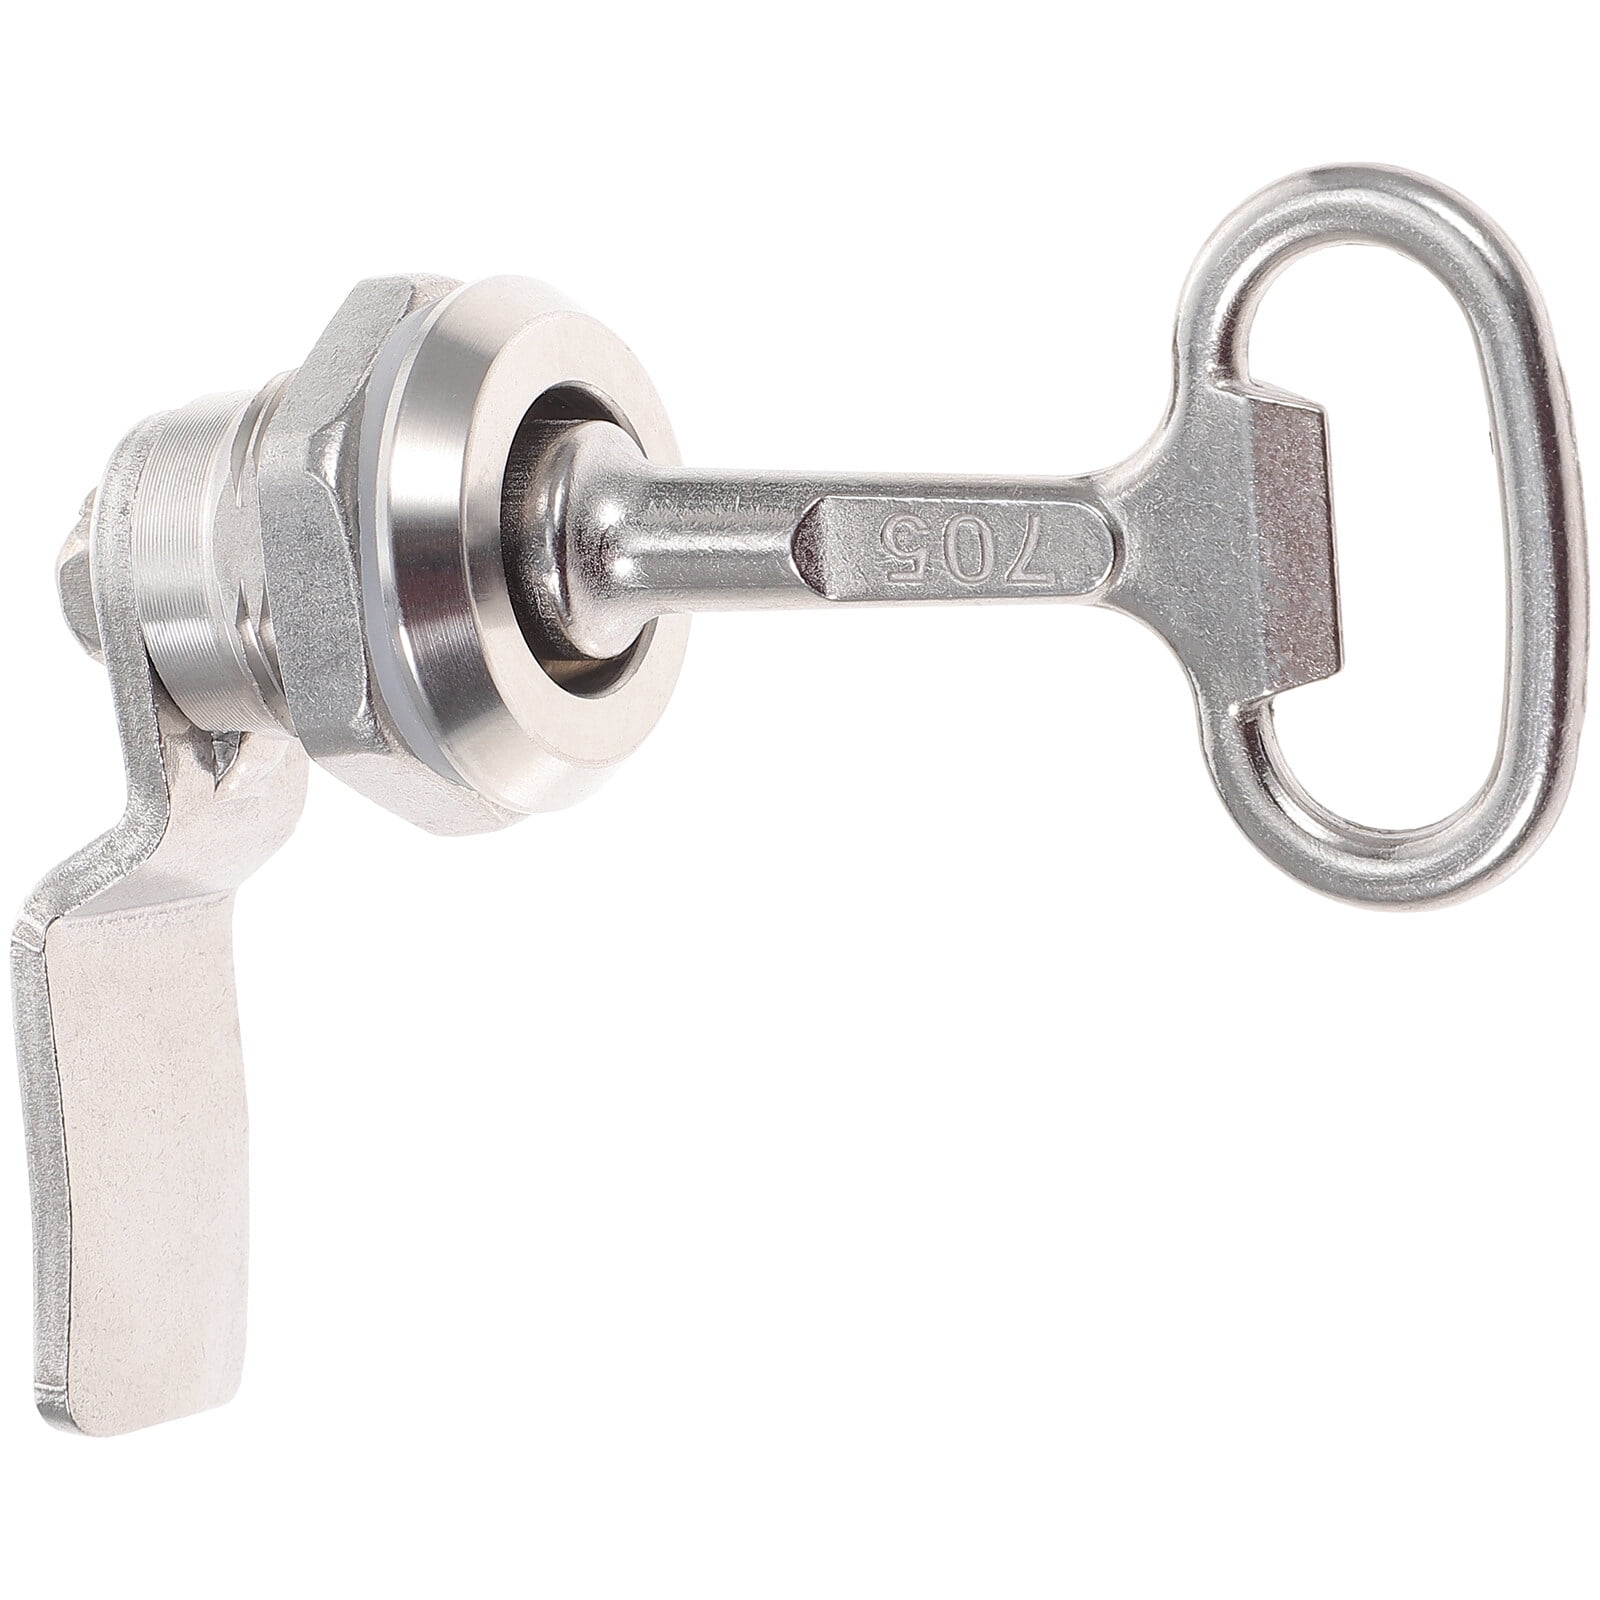 Lock Keys Replacement Desk Drawer Cabinet Steel Panel File Door Truck – Y&Y  Decor